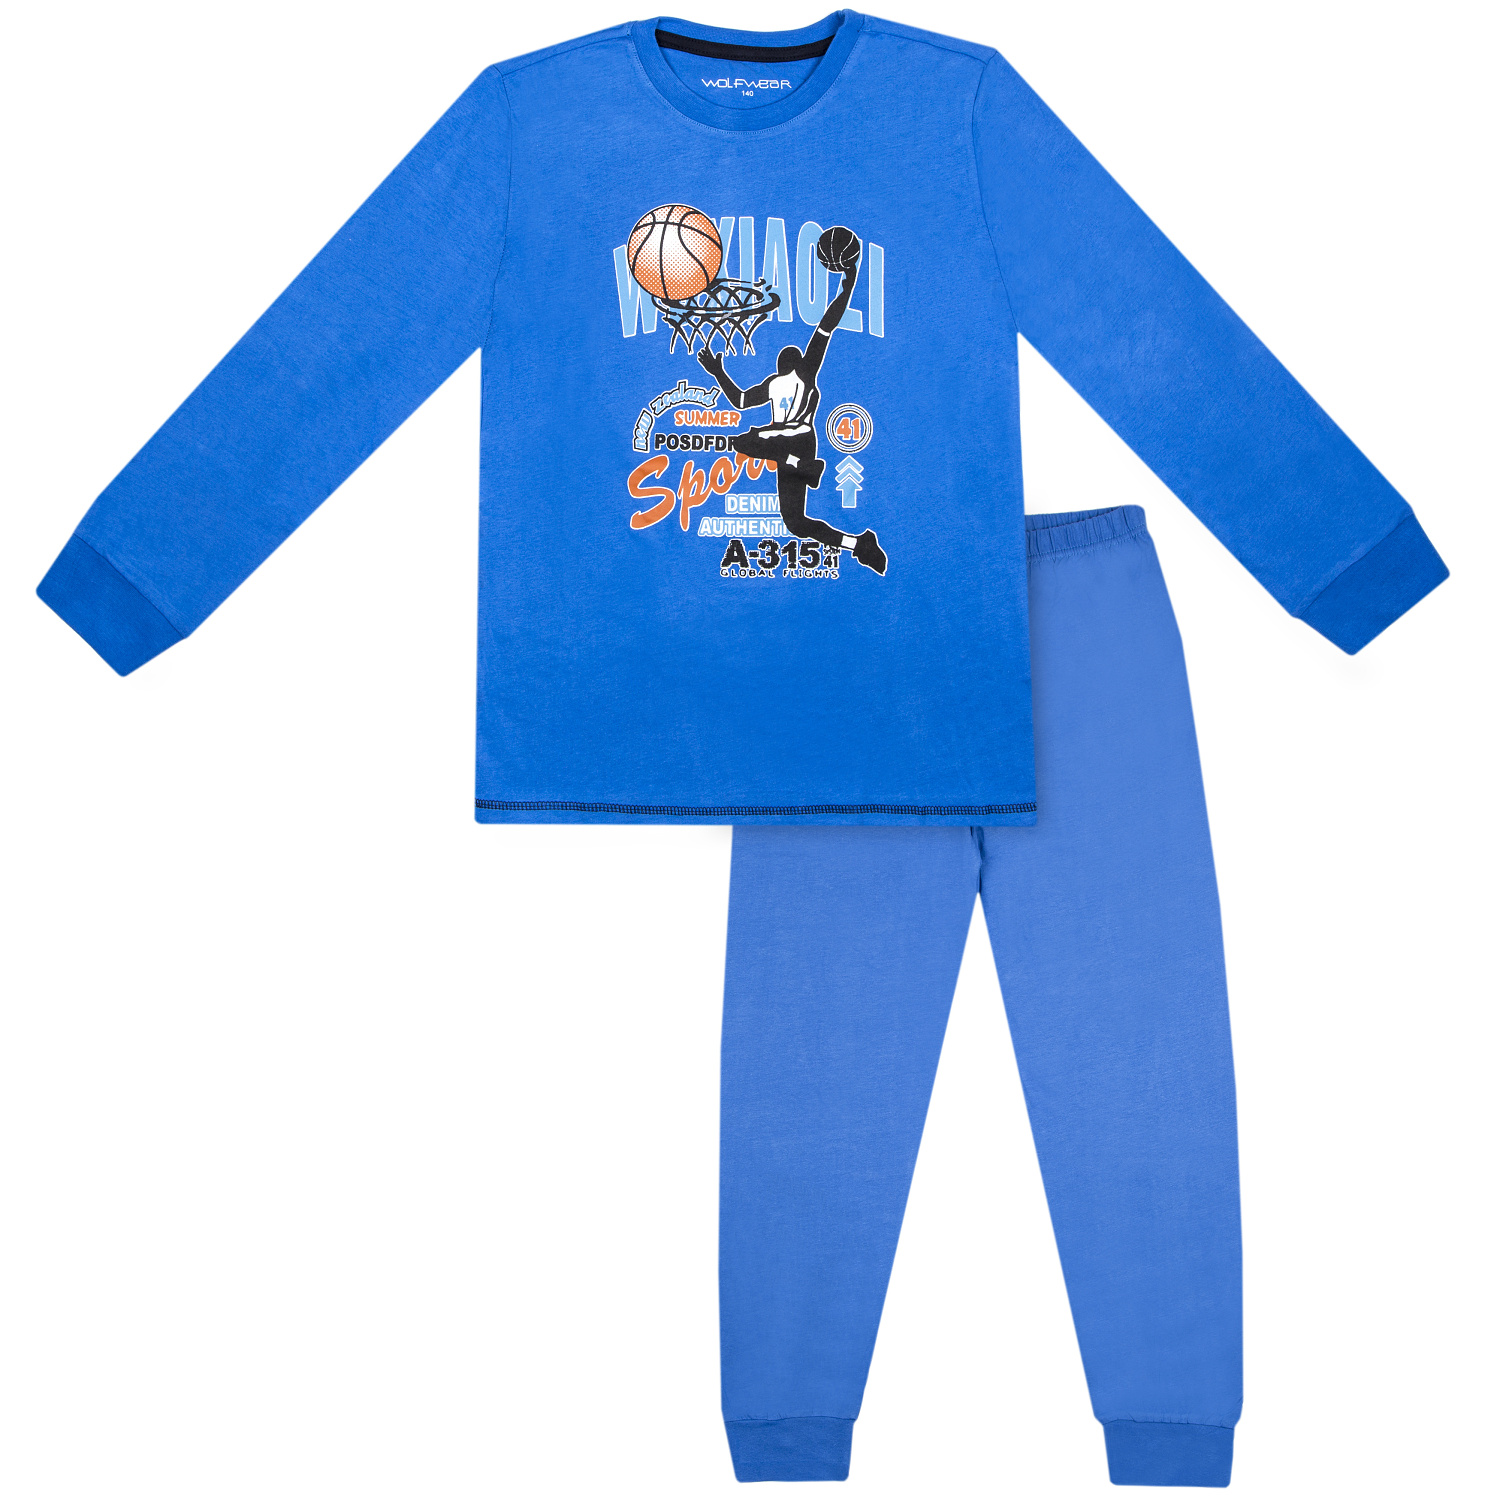 Chlapecké pyžamo - Wolf S2256B, modrá Barva: Modrá, Velikost: 164